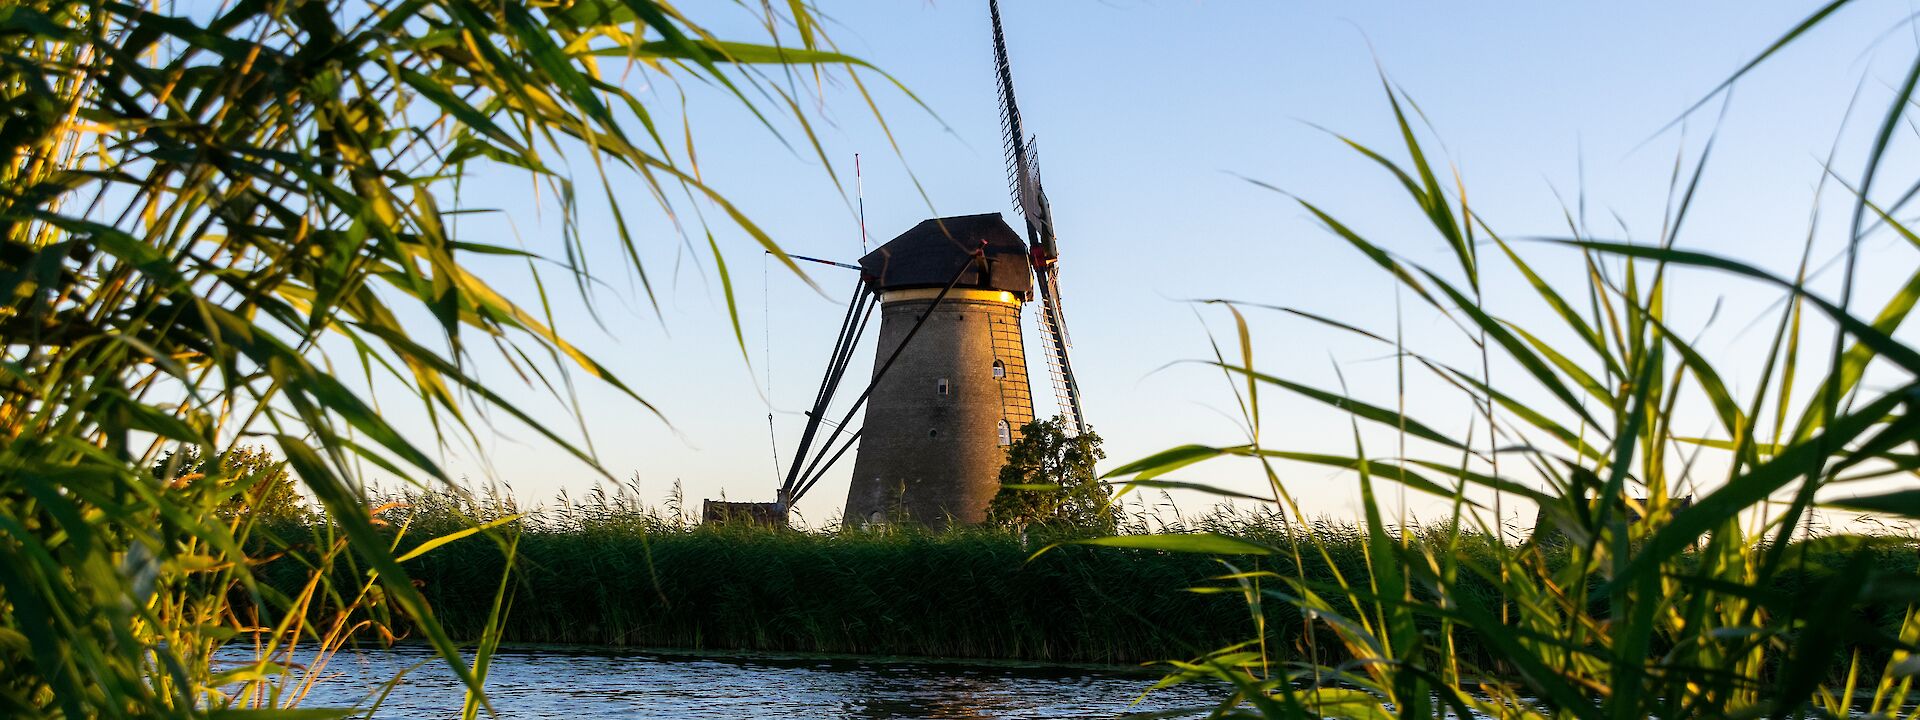 Kinderdijk Windmill, Netherlands. Thomas Bormans@Unsplash